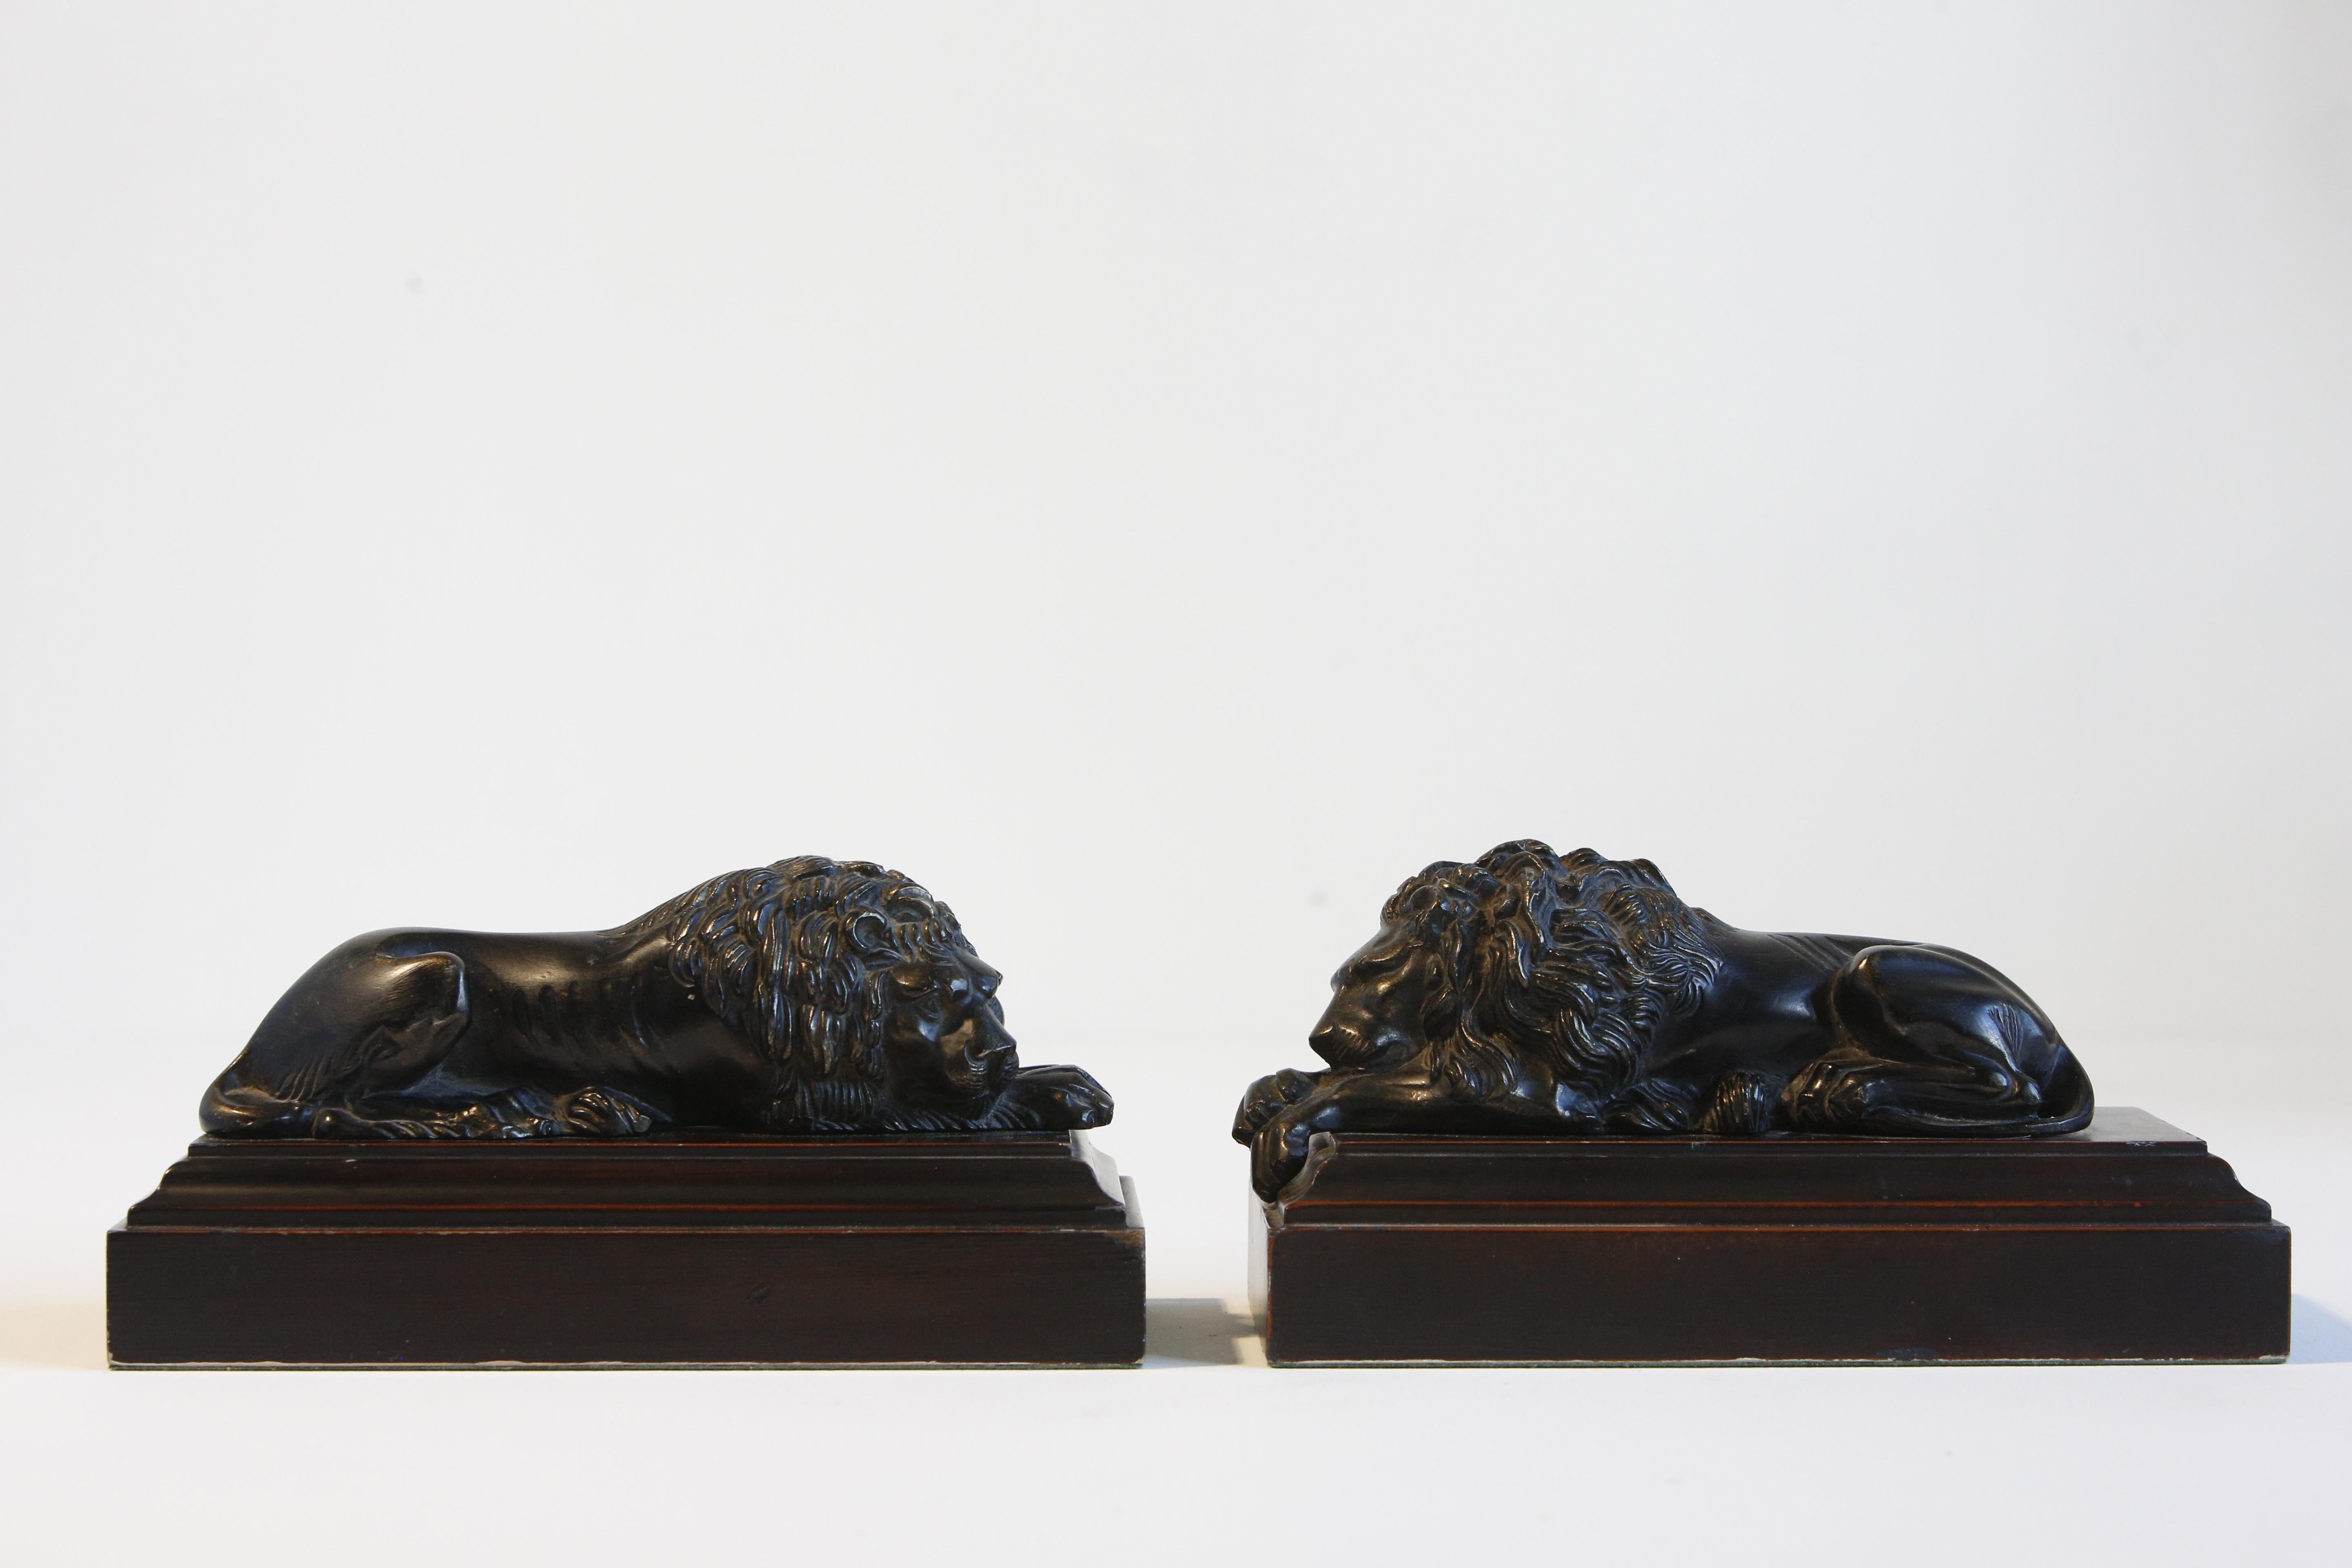 Grand Tour Pair of Cast Sculptures Bronze Lions, after Antonio Canova, 19th Century For Sale